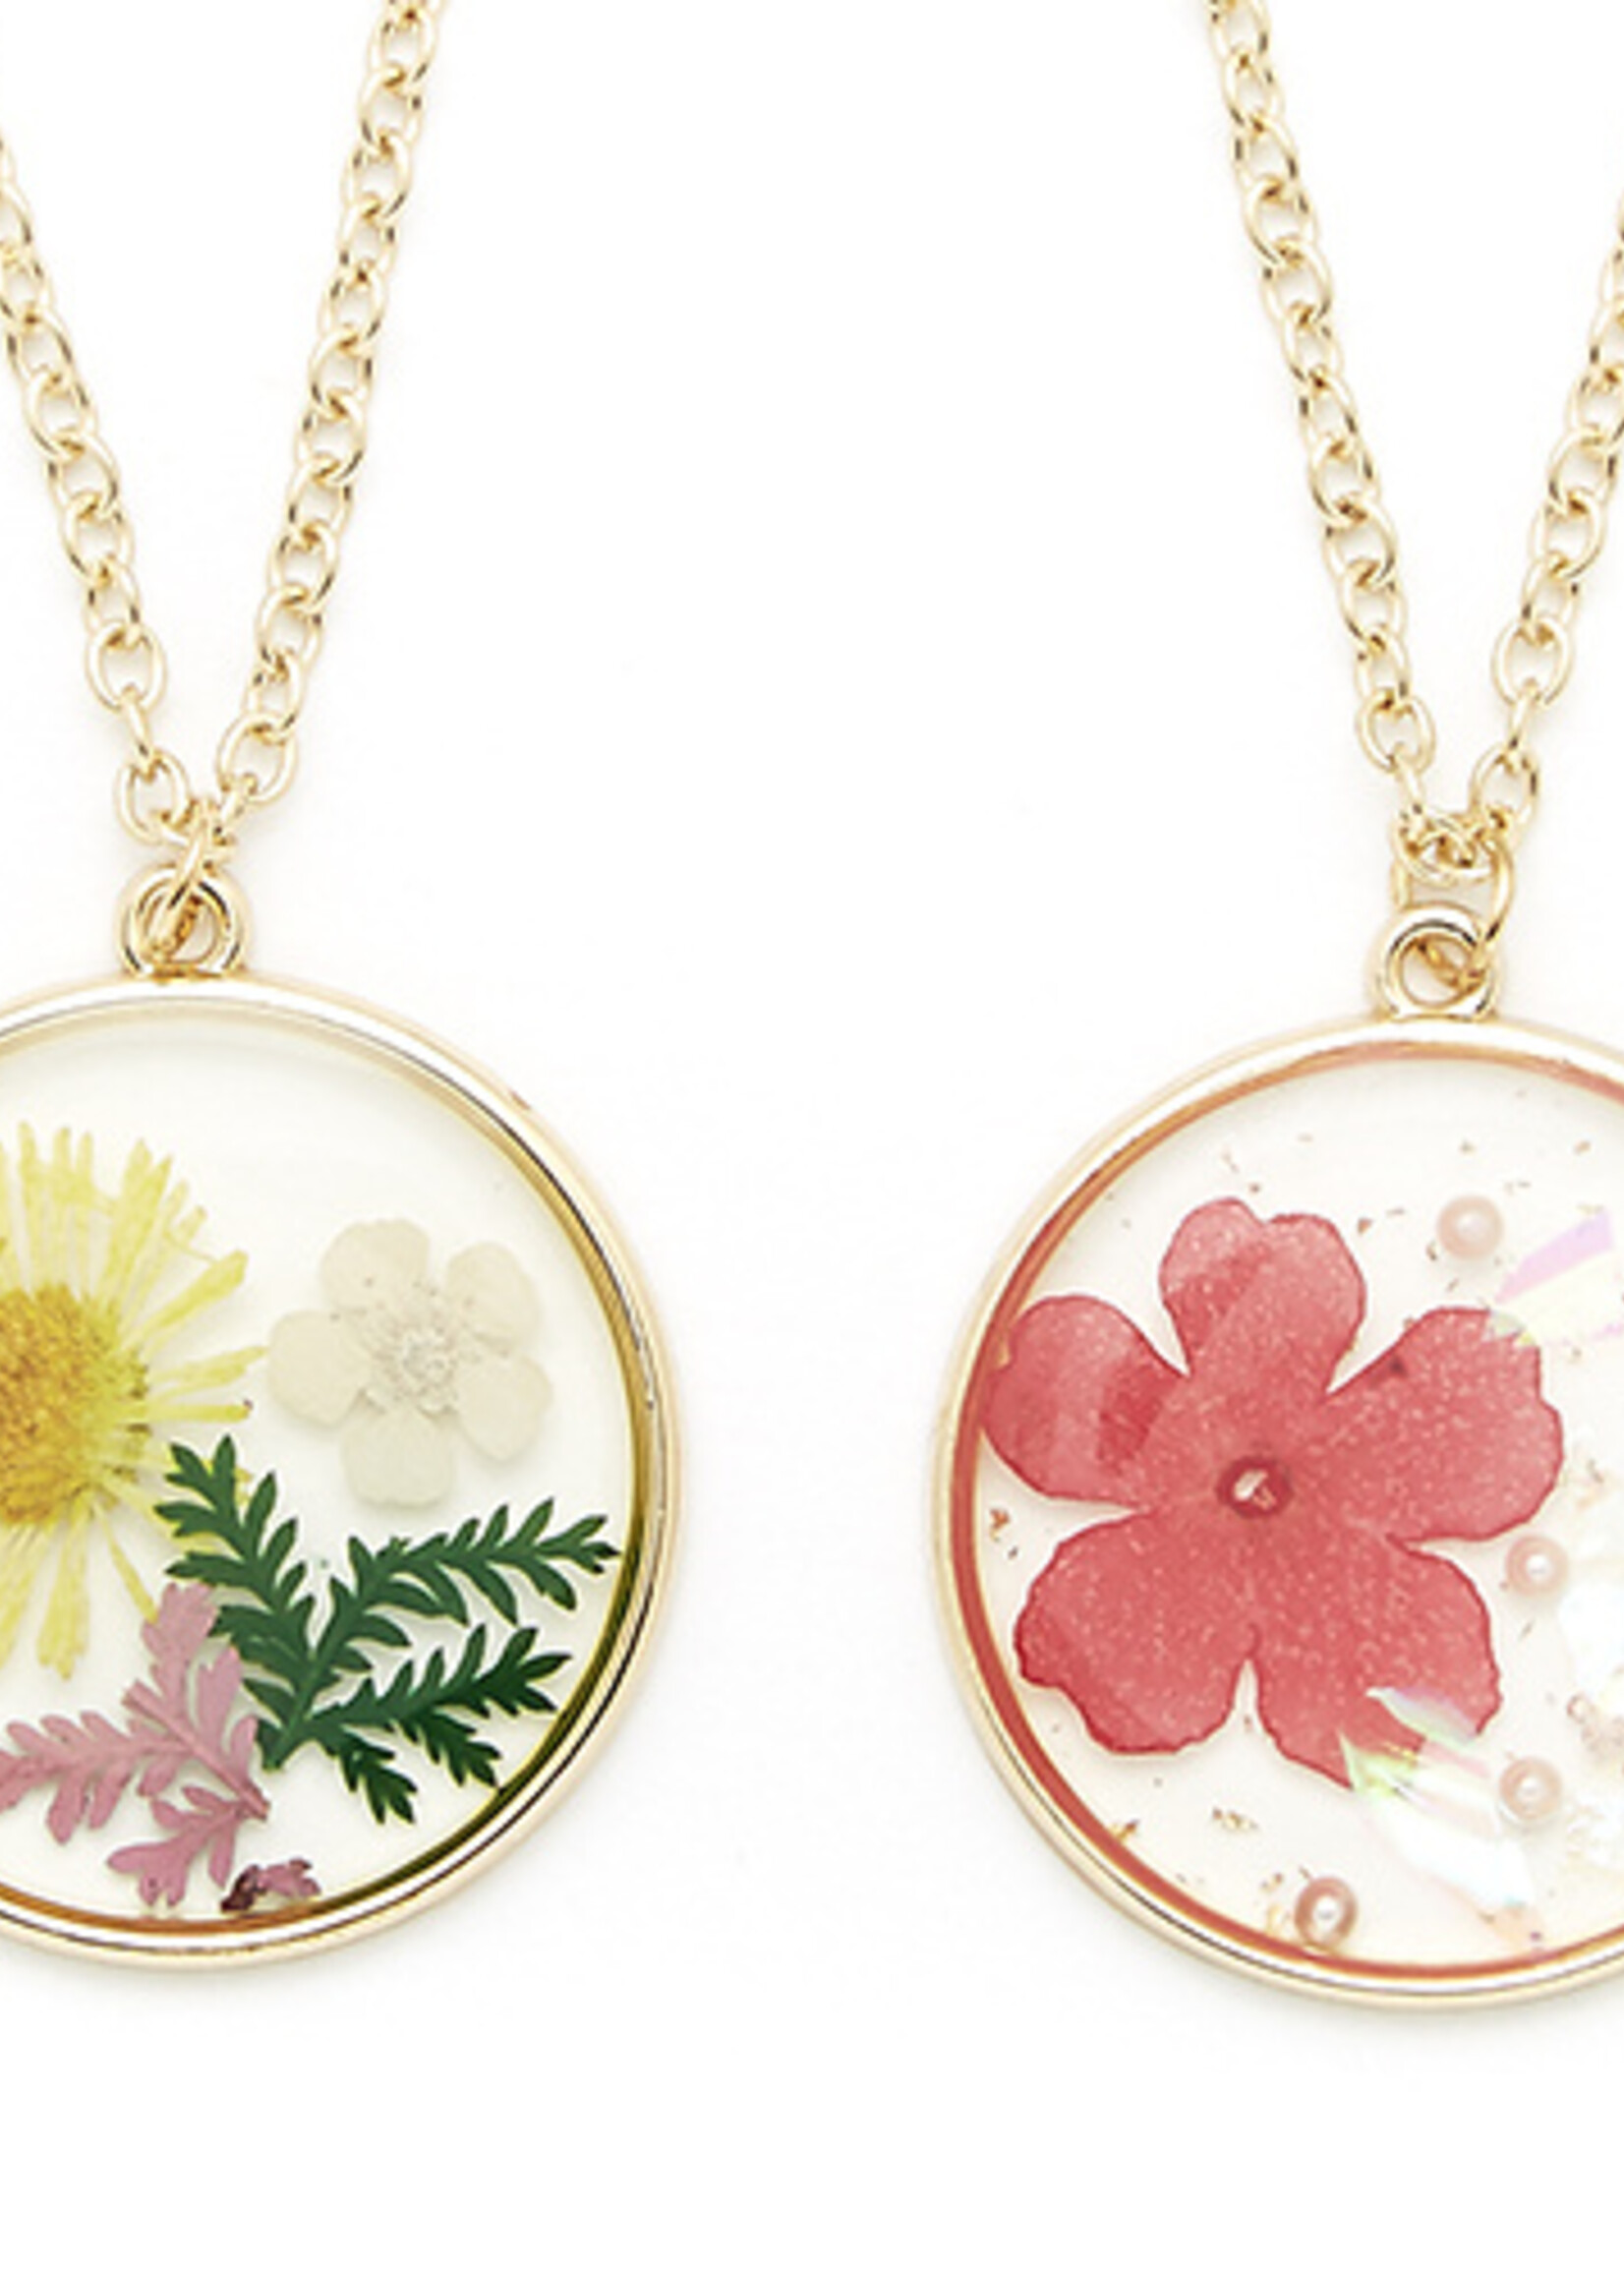 Dasha Designs Circle Pressed Flower Necklace